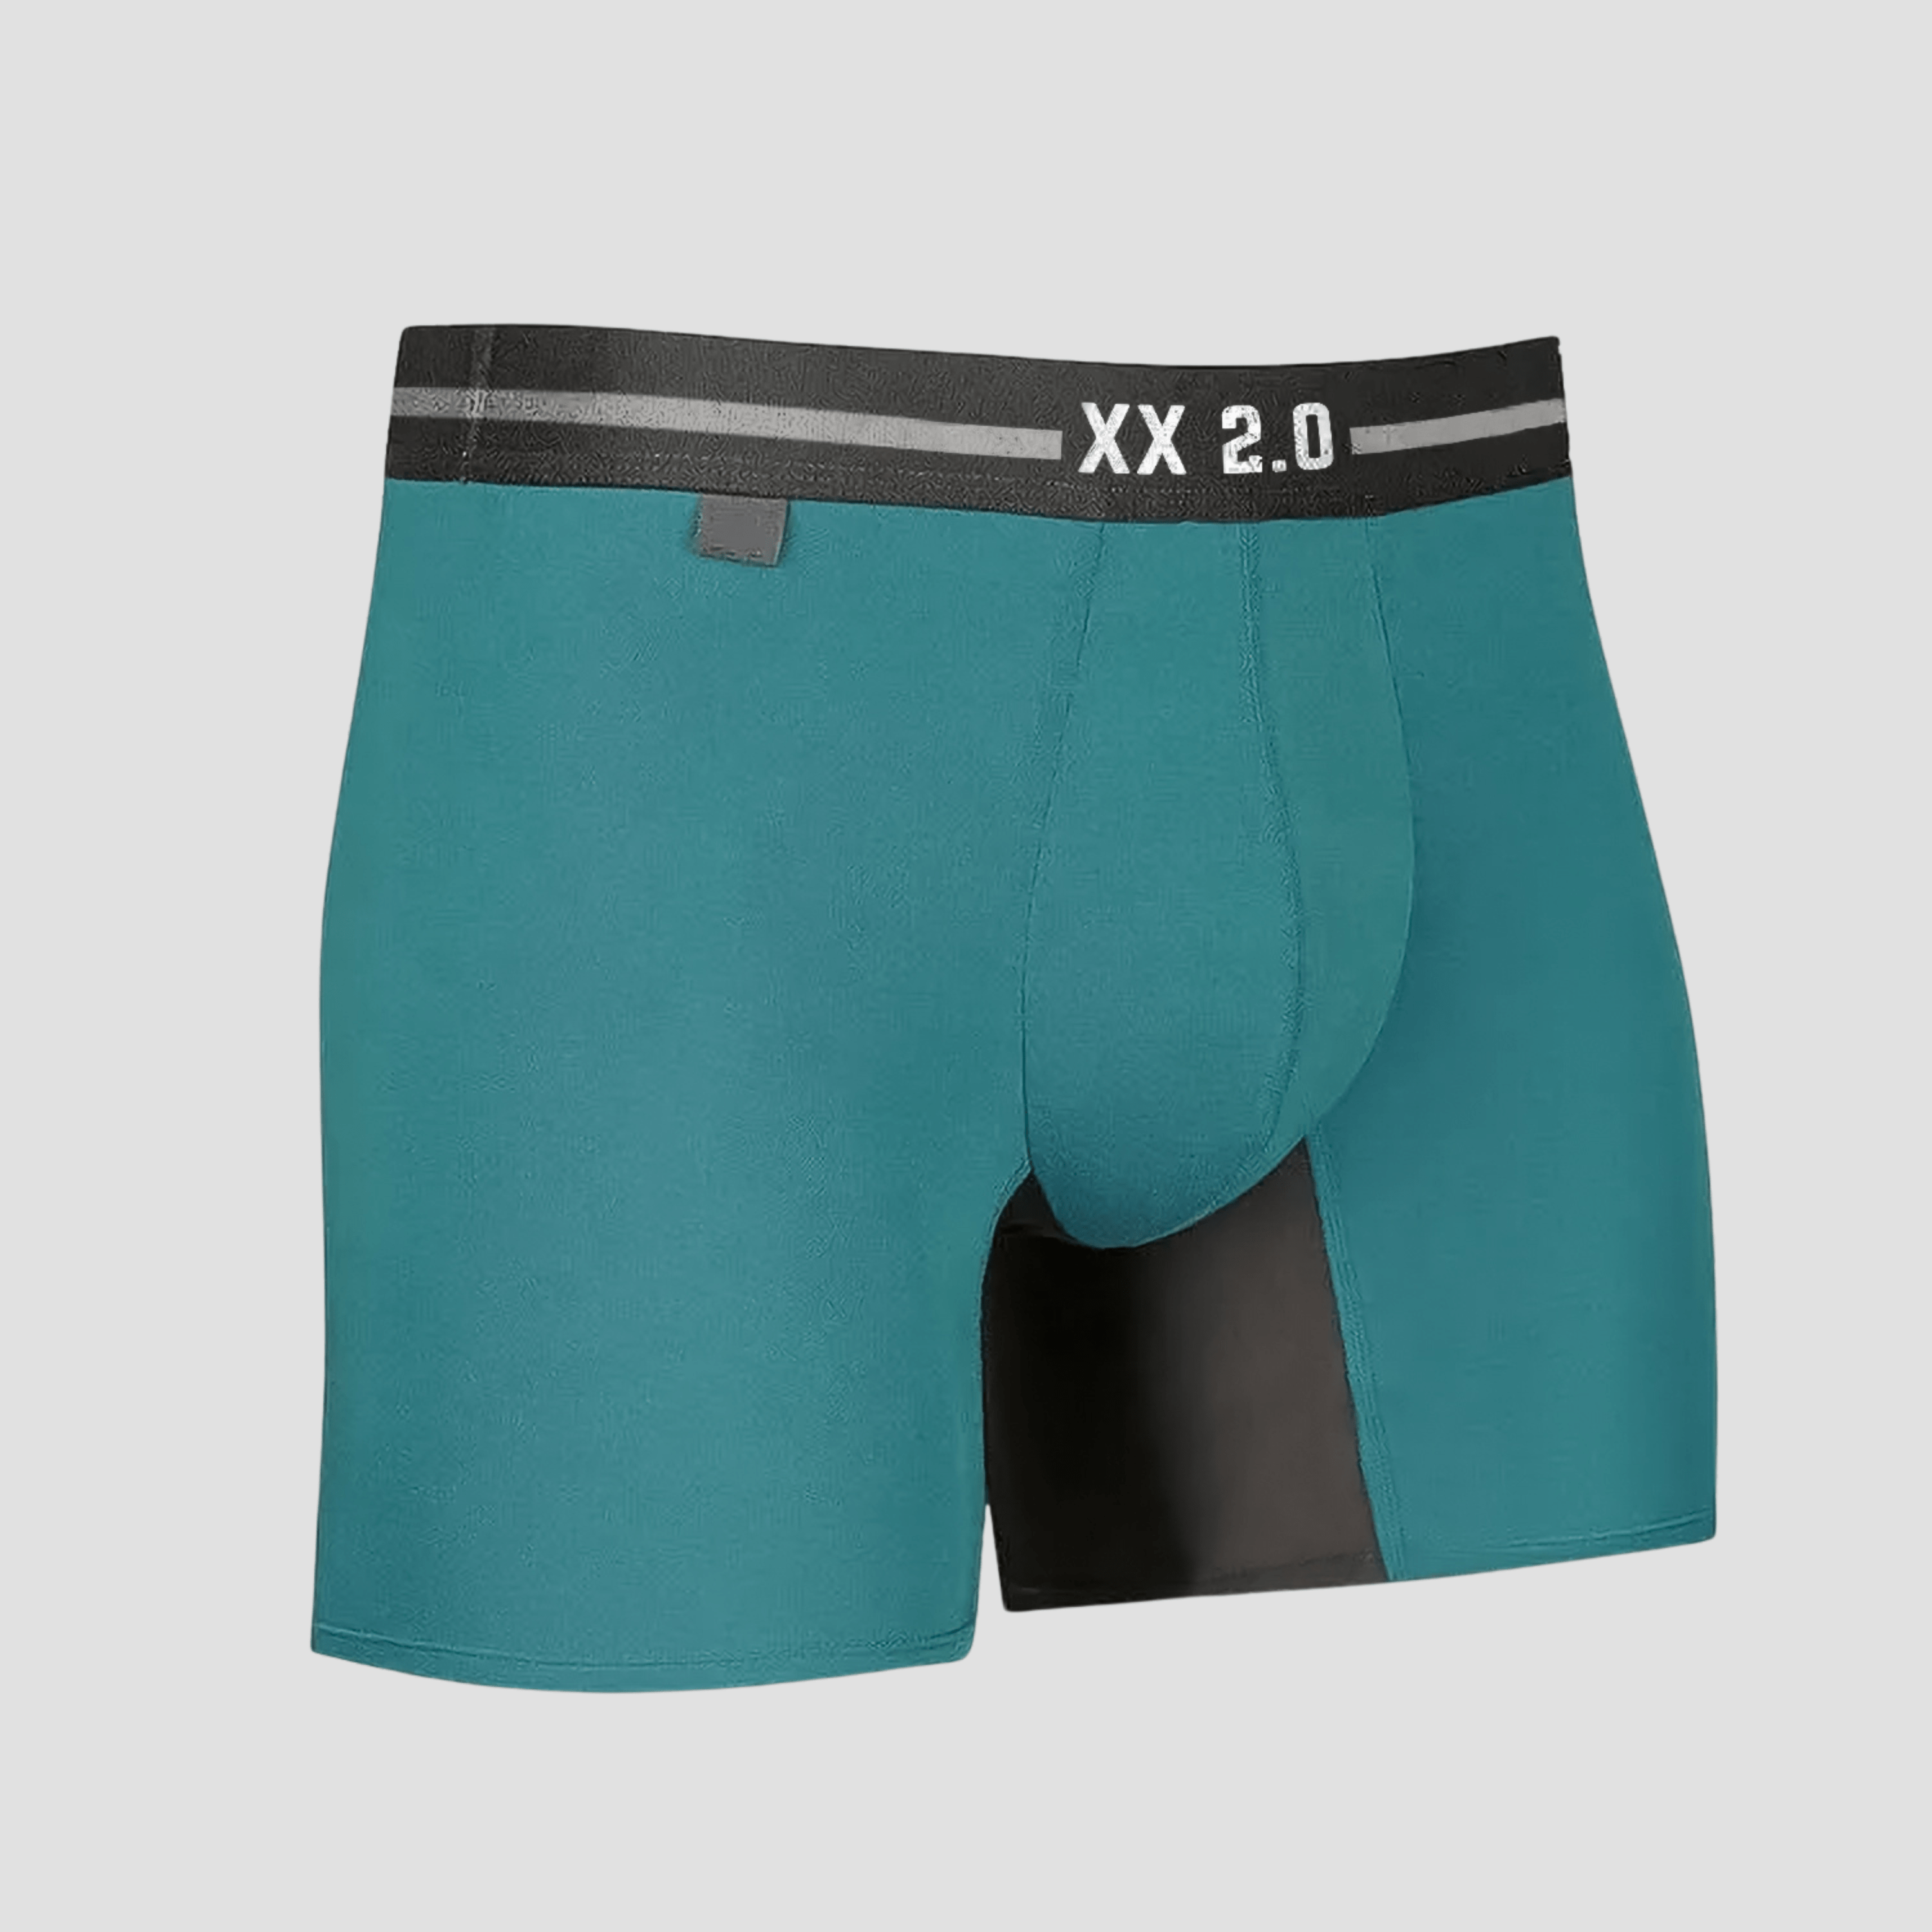 BOXXIS 2.0 / Boxershorts Mint